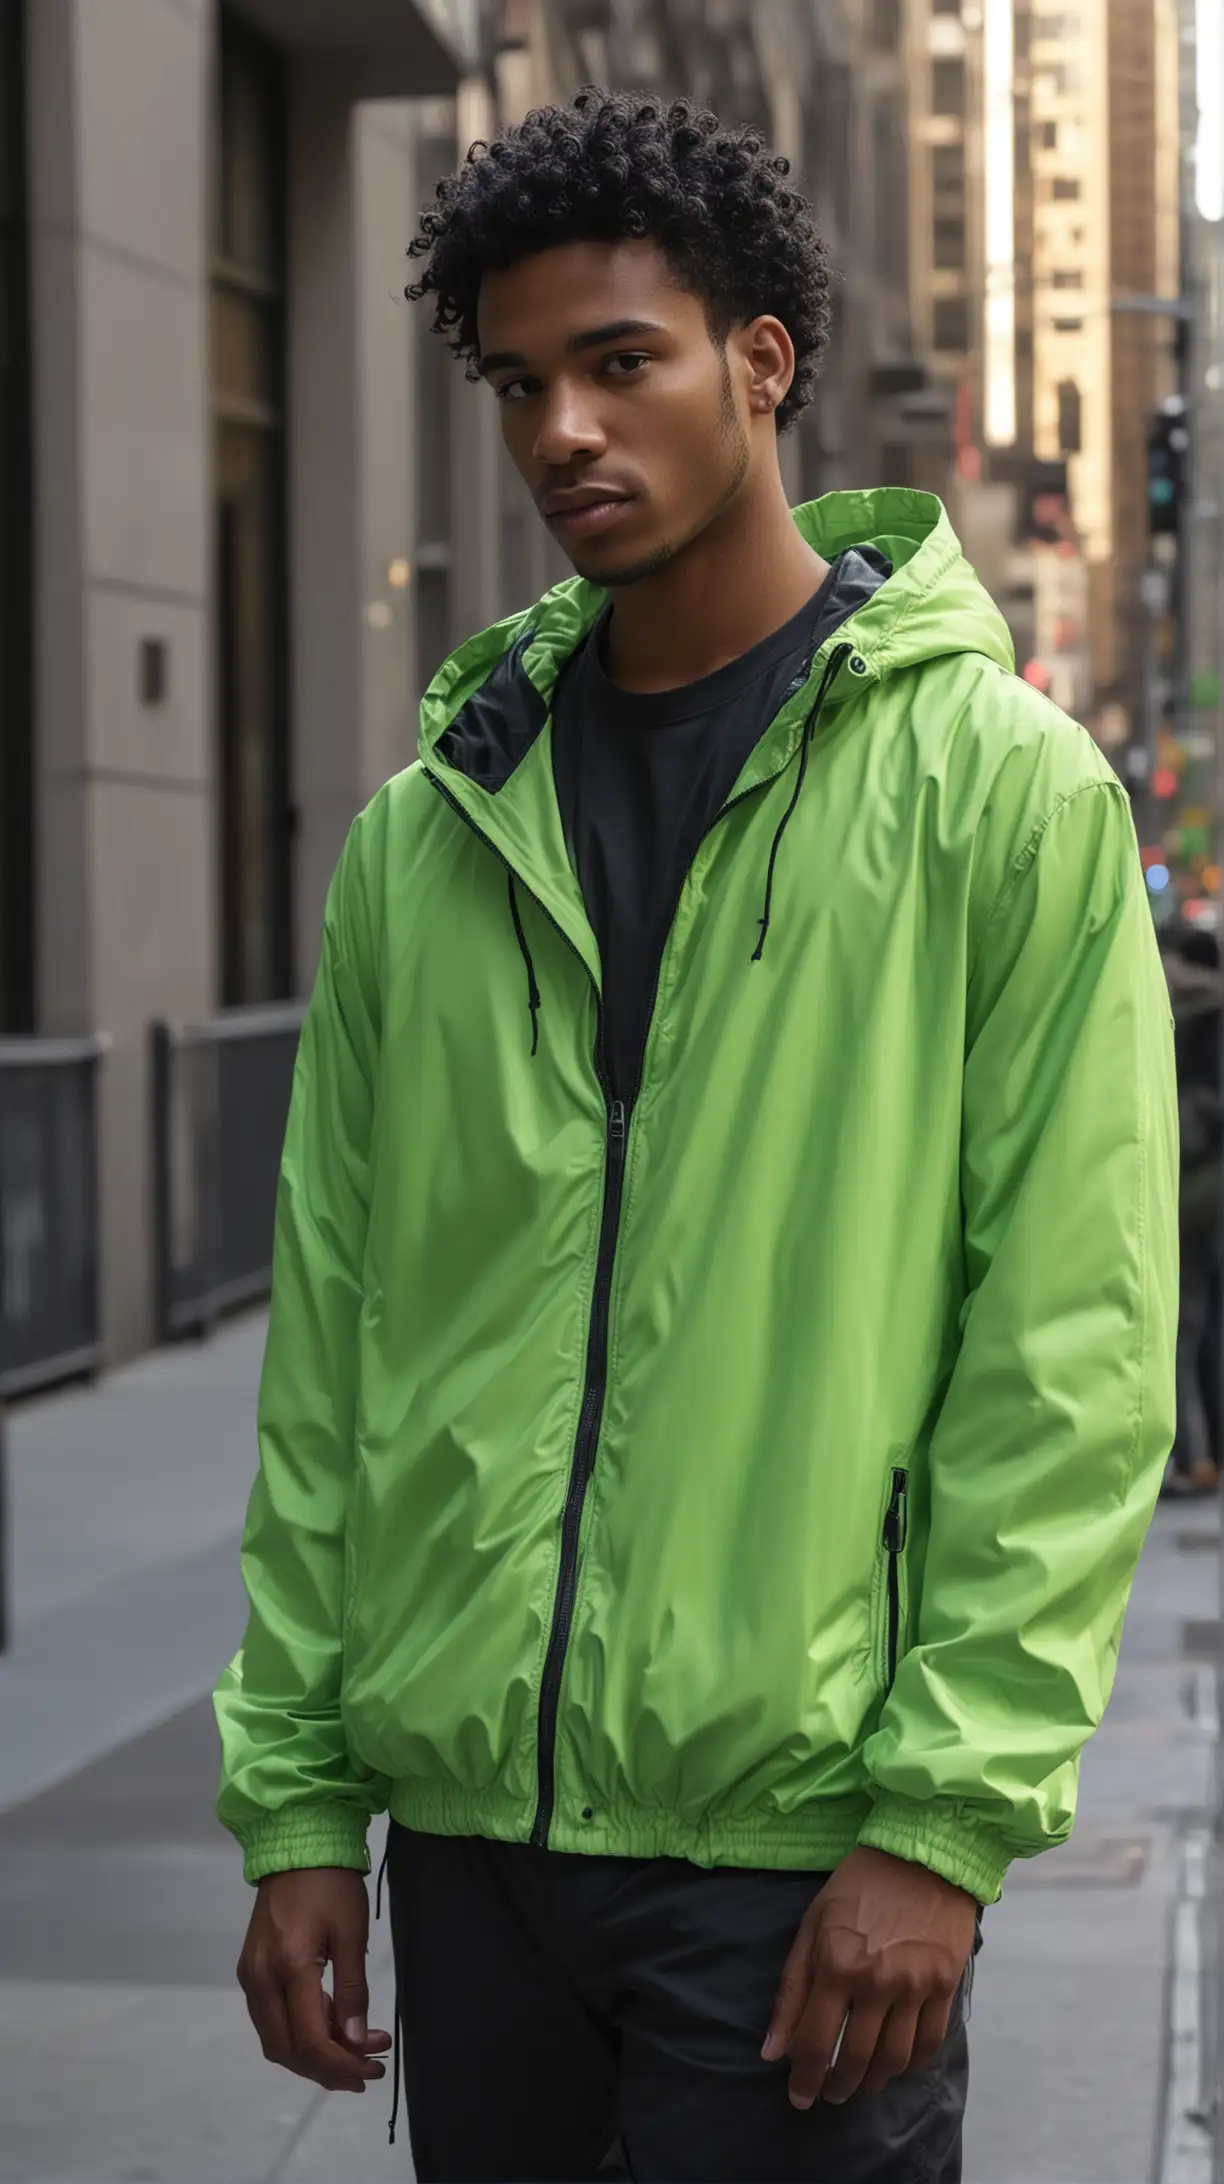 Stylish Urbanite Young Man in Neon Green Windbreaker on New York City Sidewalk